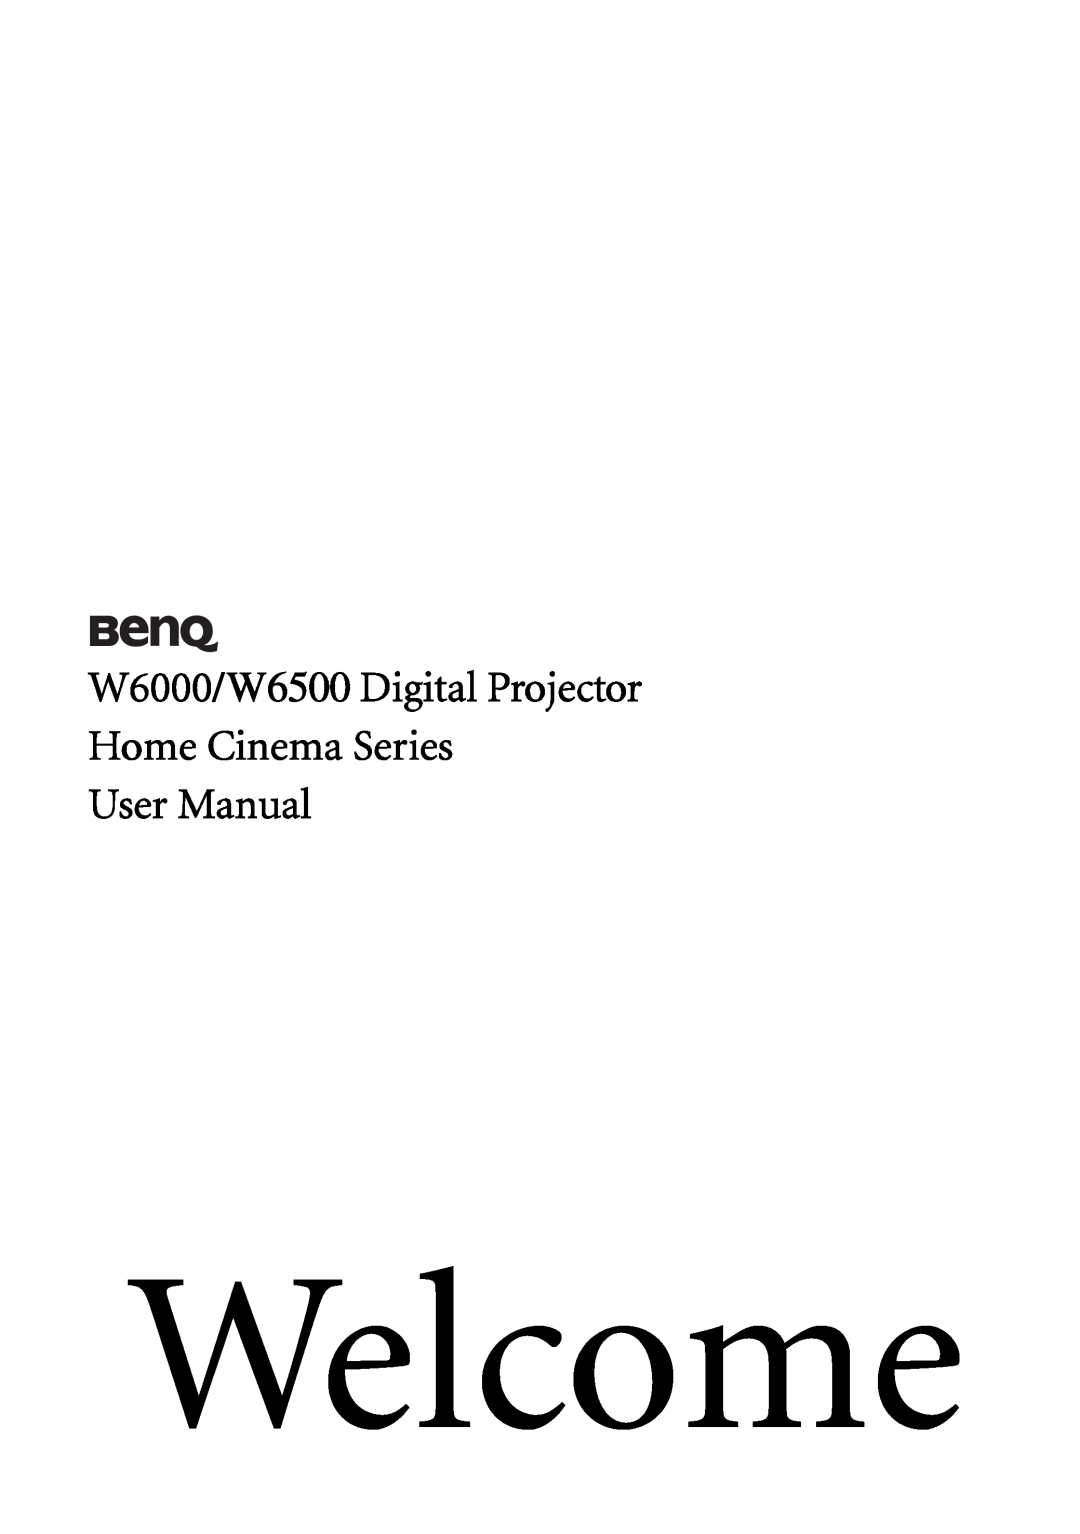 BenQ user manual W6000/W6500 Digital Projector Home Cinema Series User Manual, Welcome 